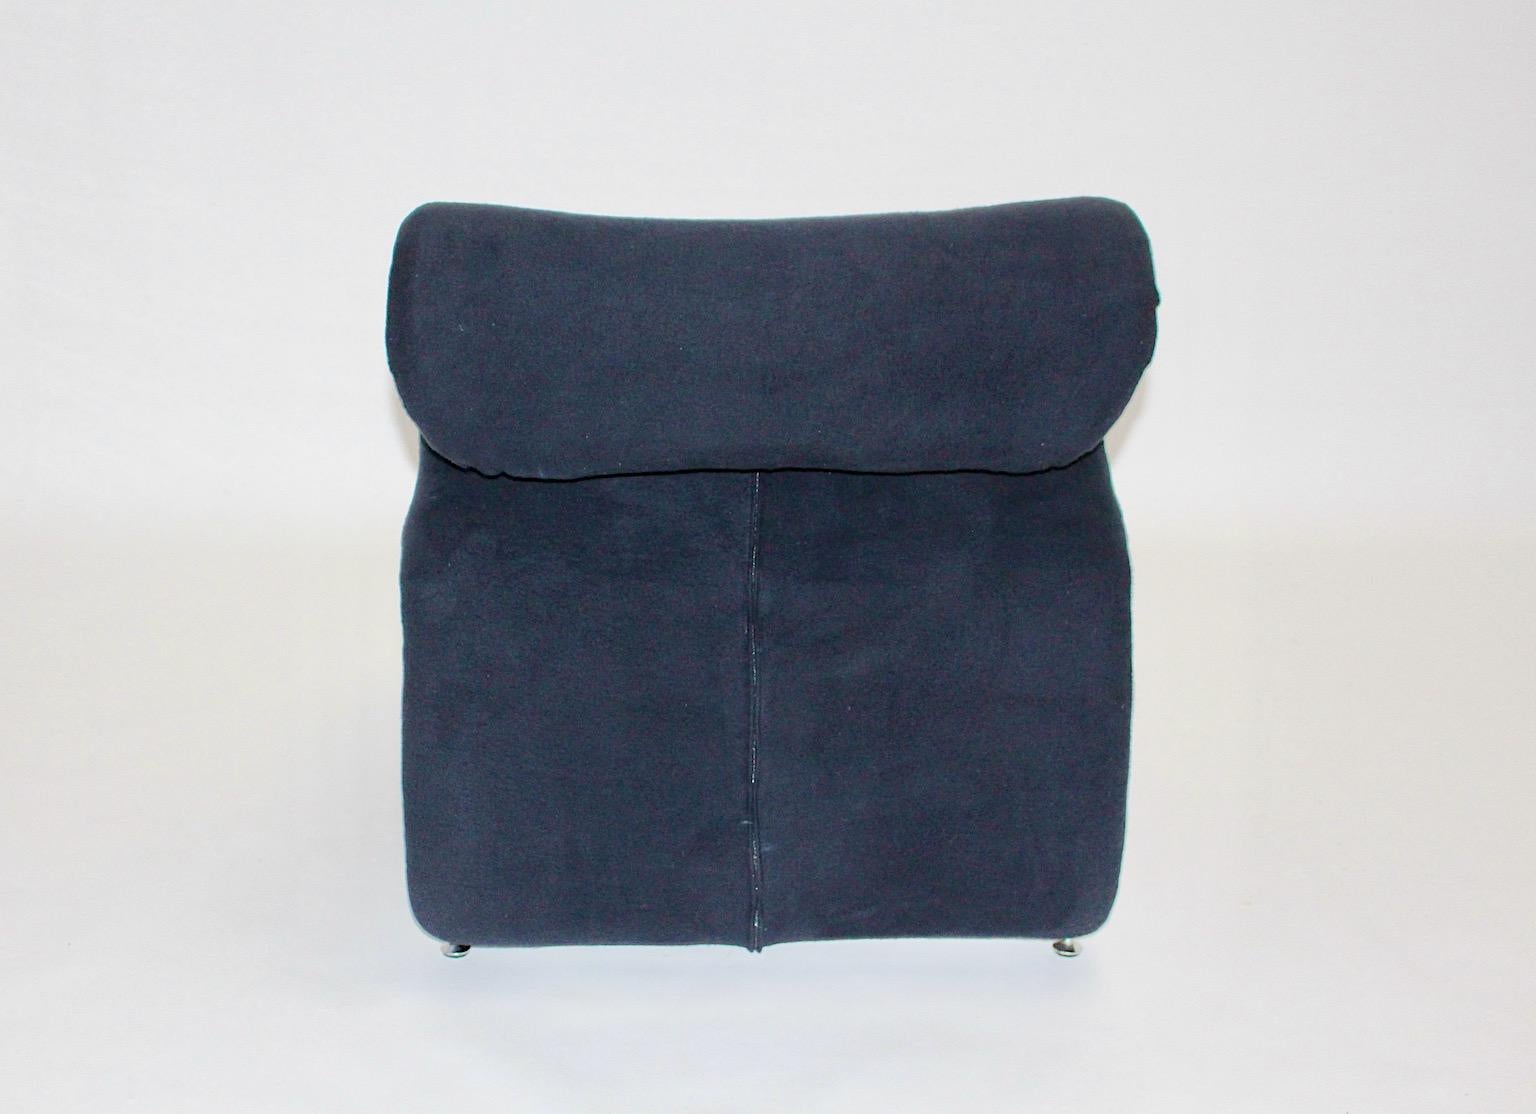 Sculptural Space Age Vintage Blue Lounge Chair Etcetera Jan Ekselius, 1970s For Sale 3